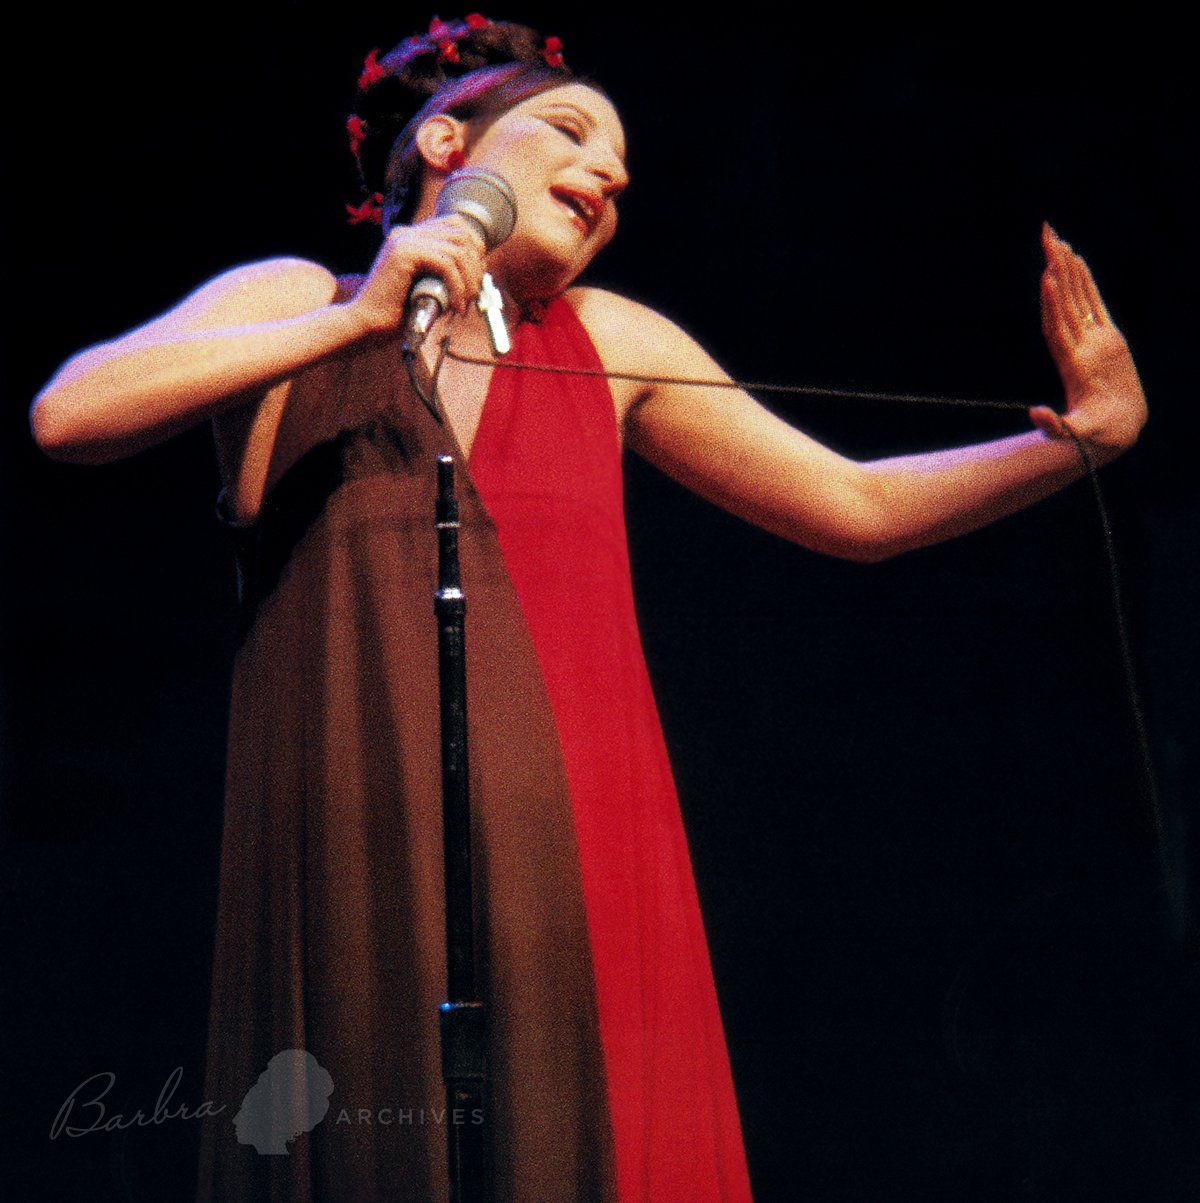 Barbra Streisand in split-colored dress with the microphone in Philadelphia.